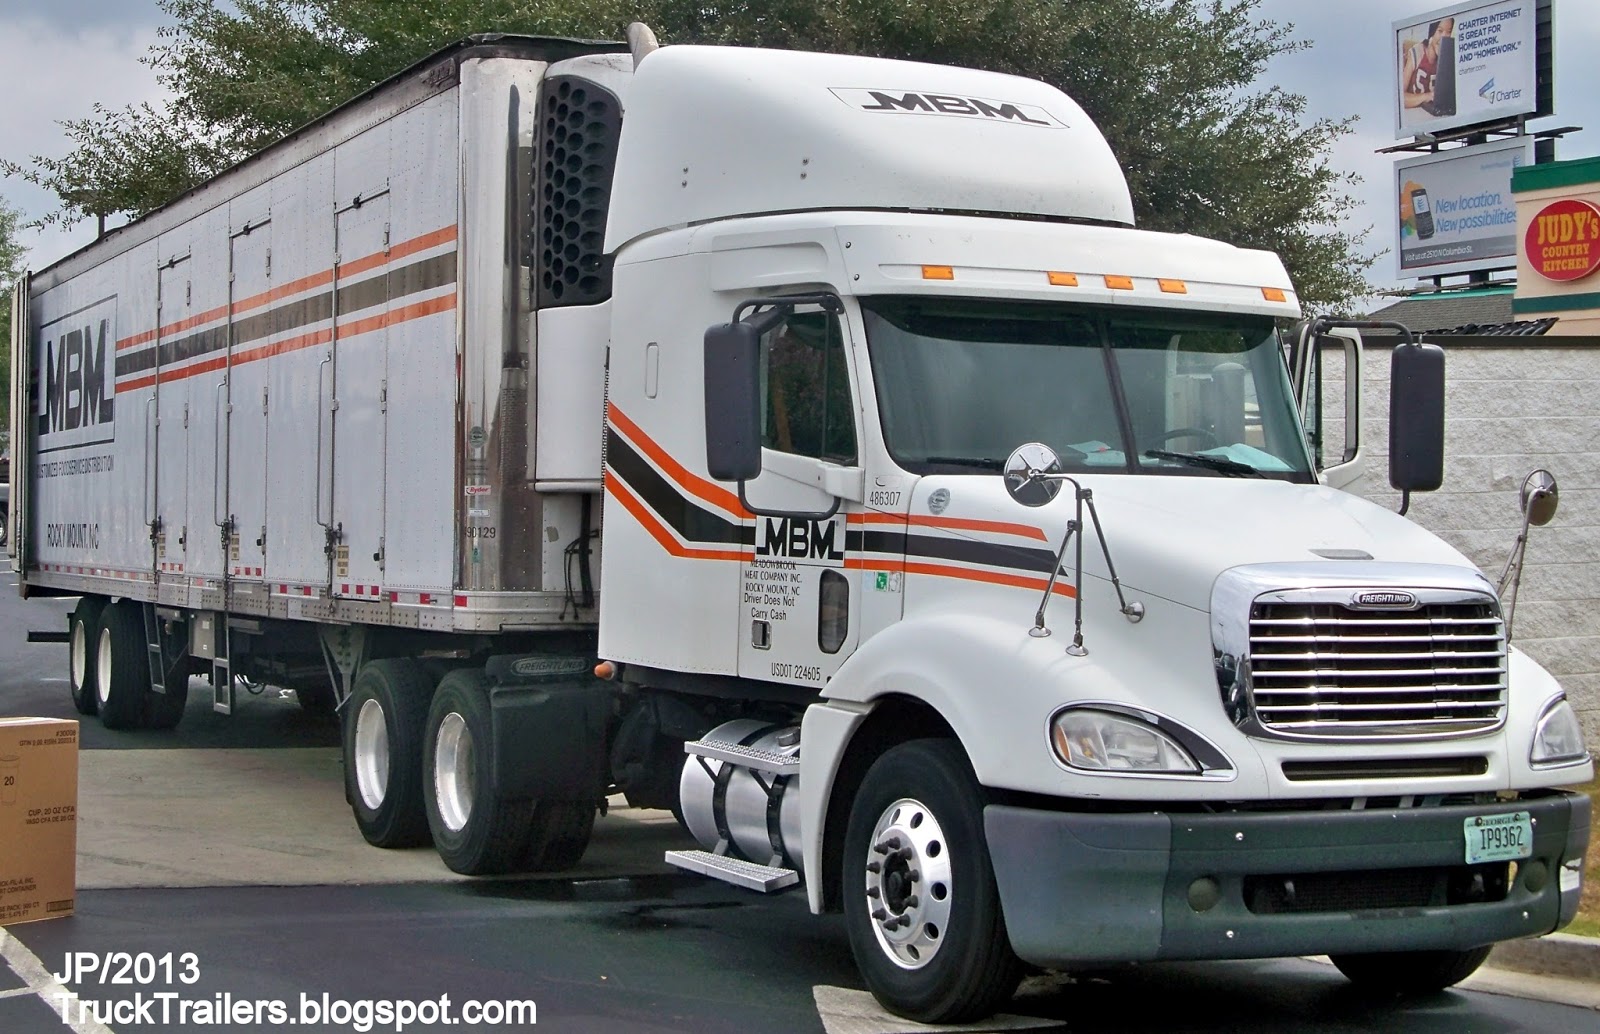 TRUCK TRAILER Trucking Express Co Logistic Diesel Image Mack